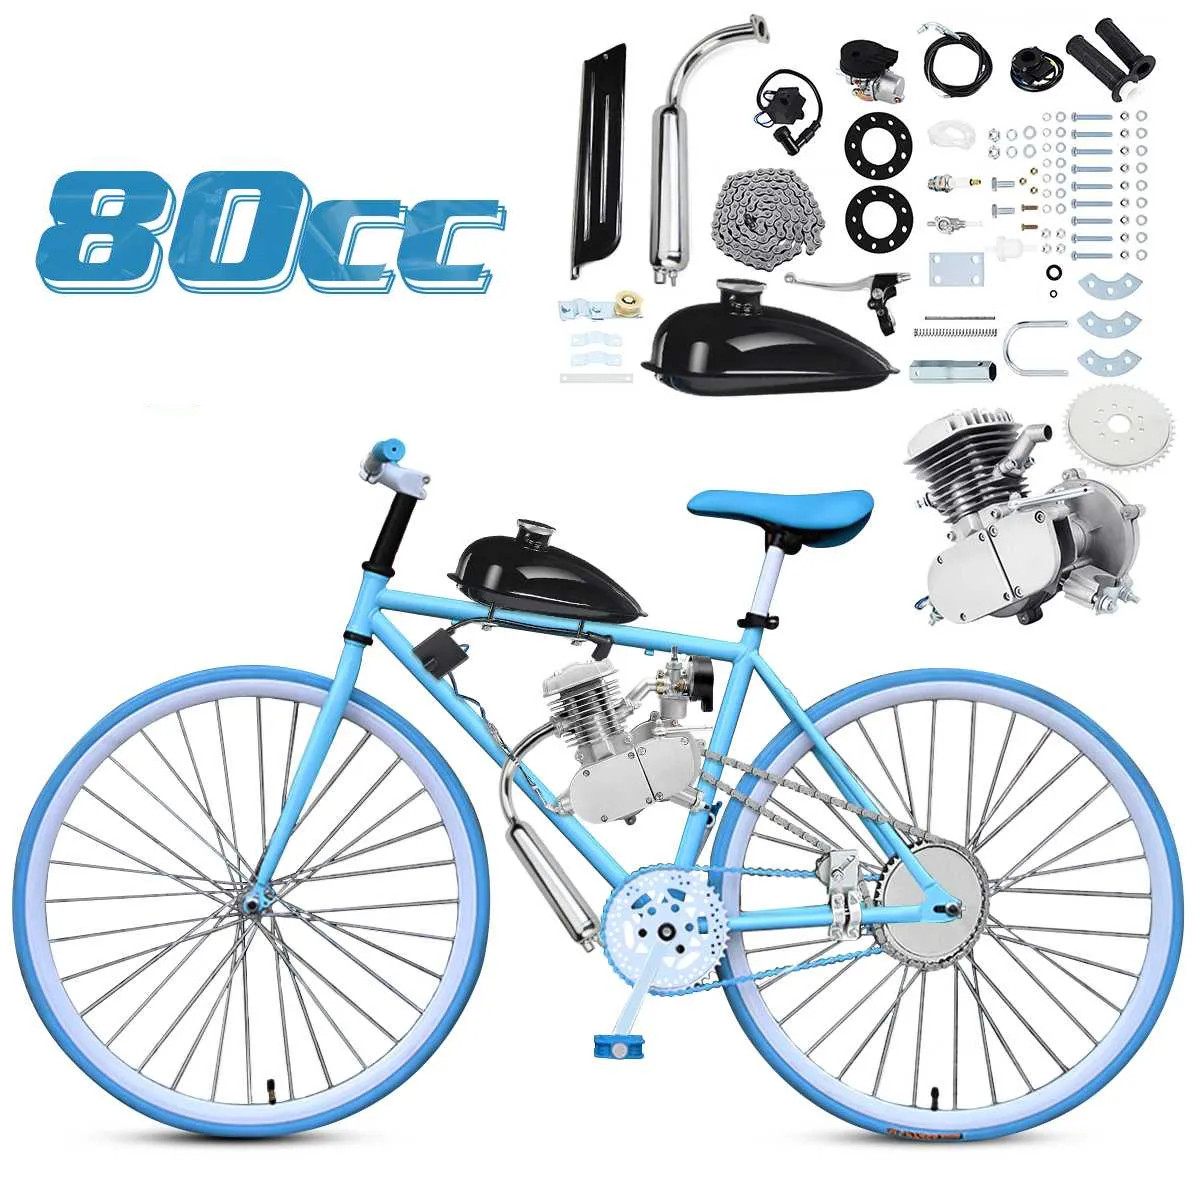 Kit de motor de bicicleta de 80 cc, kit de motor de bicicleta motorizado de  2 tiempos, kit de motor de bicicleta de 26 28, kit de motor de bicicleta